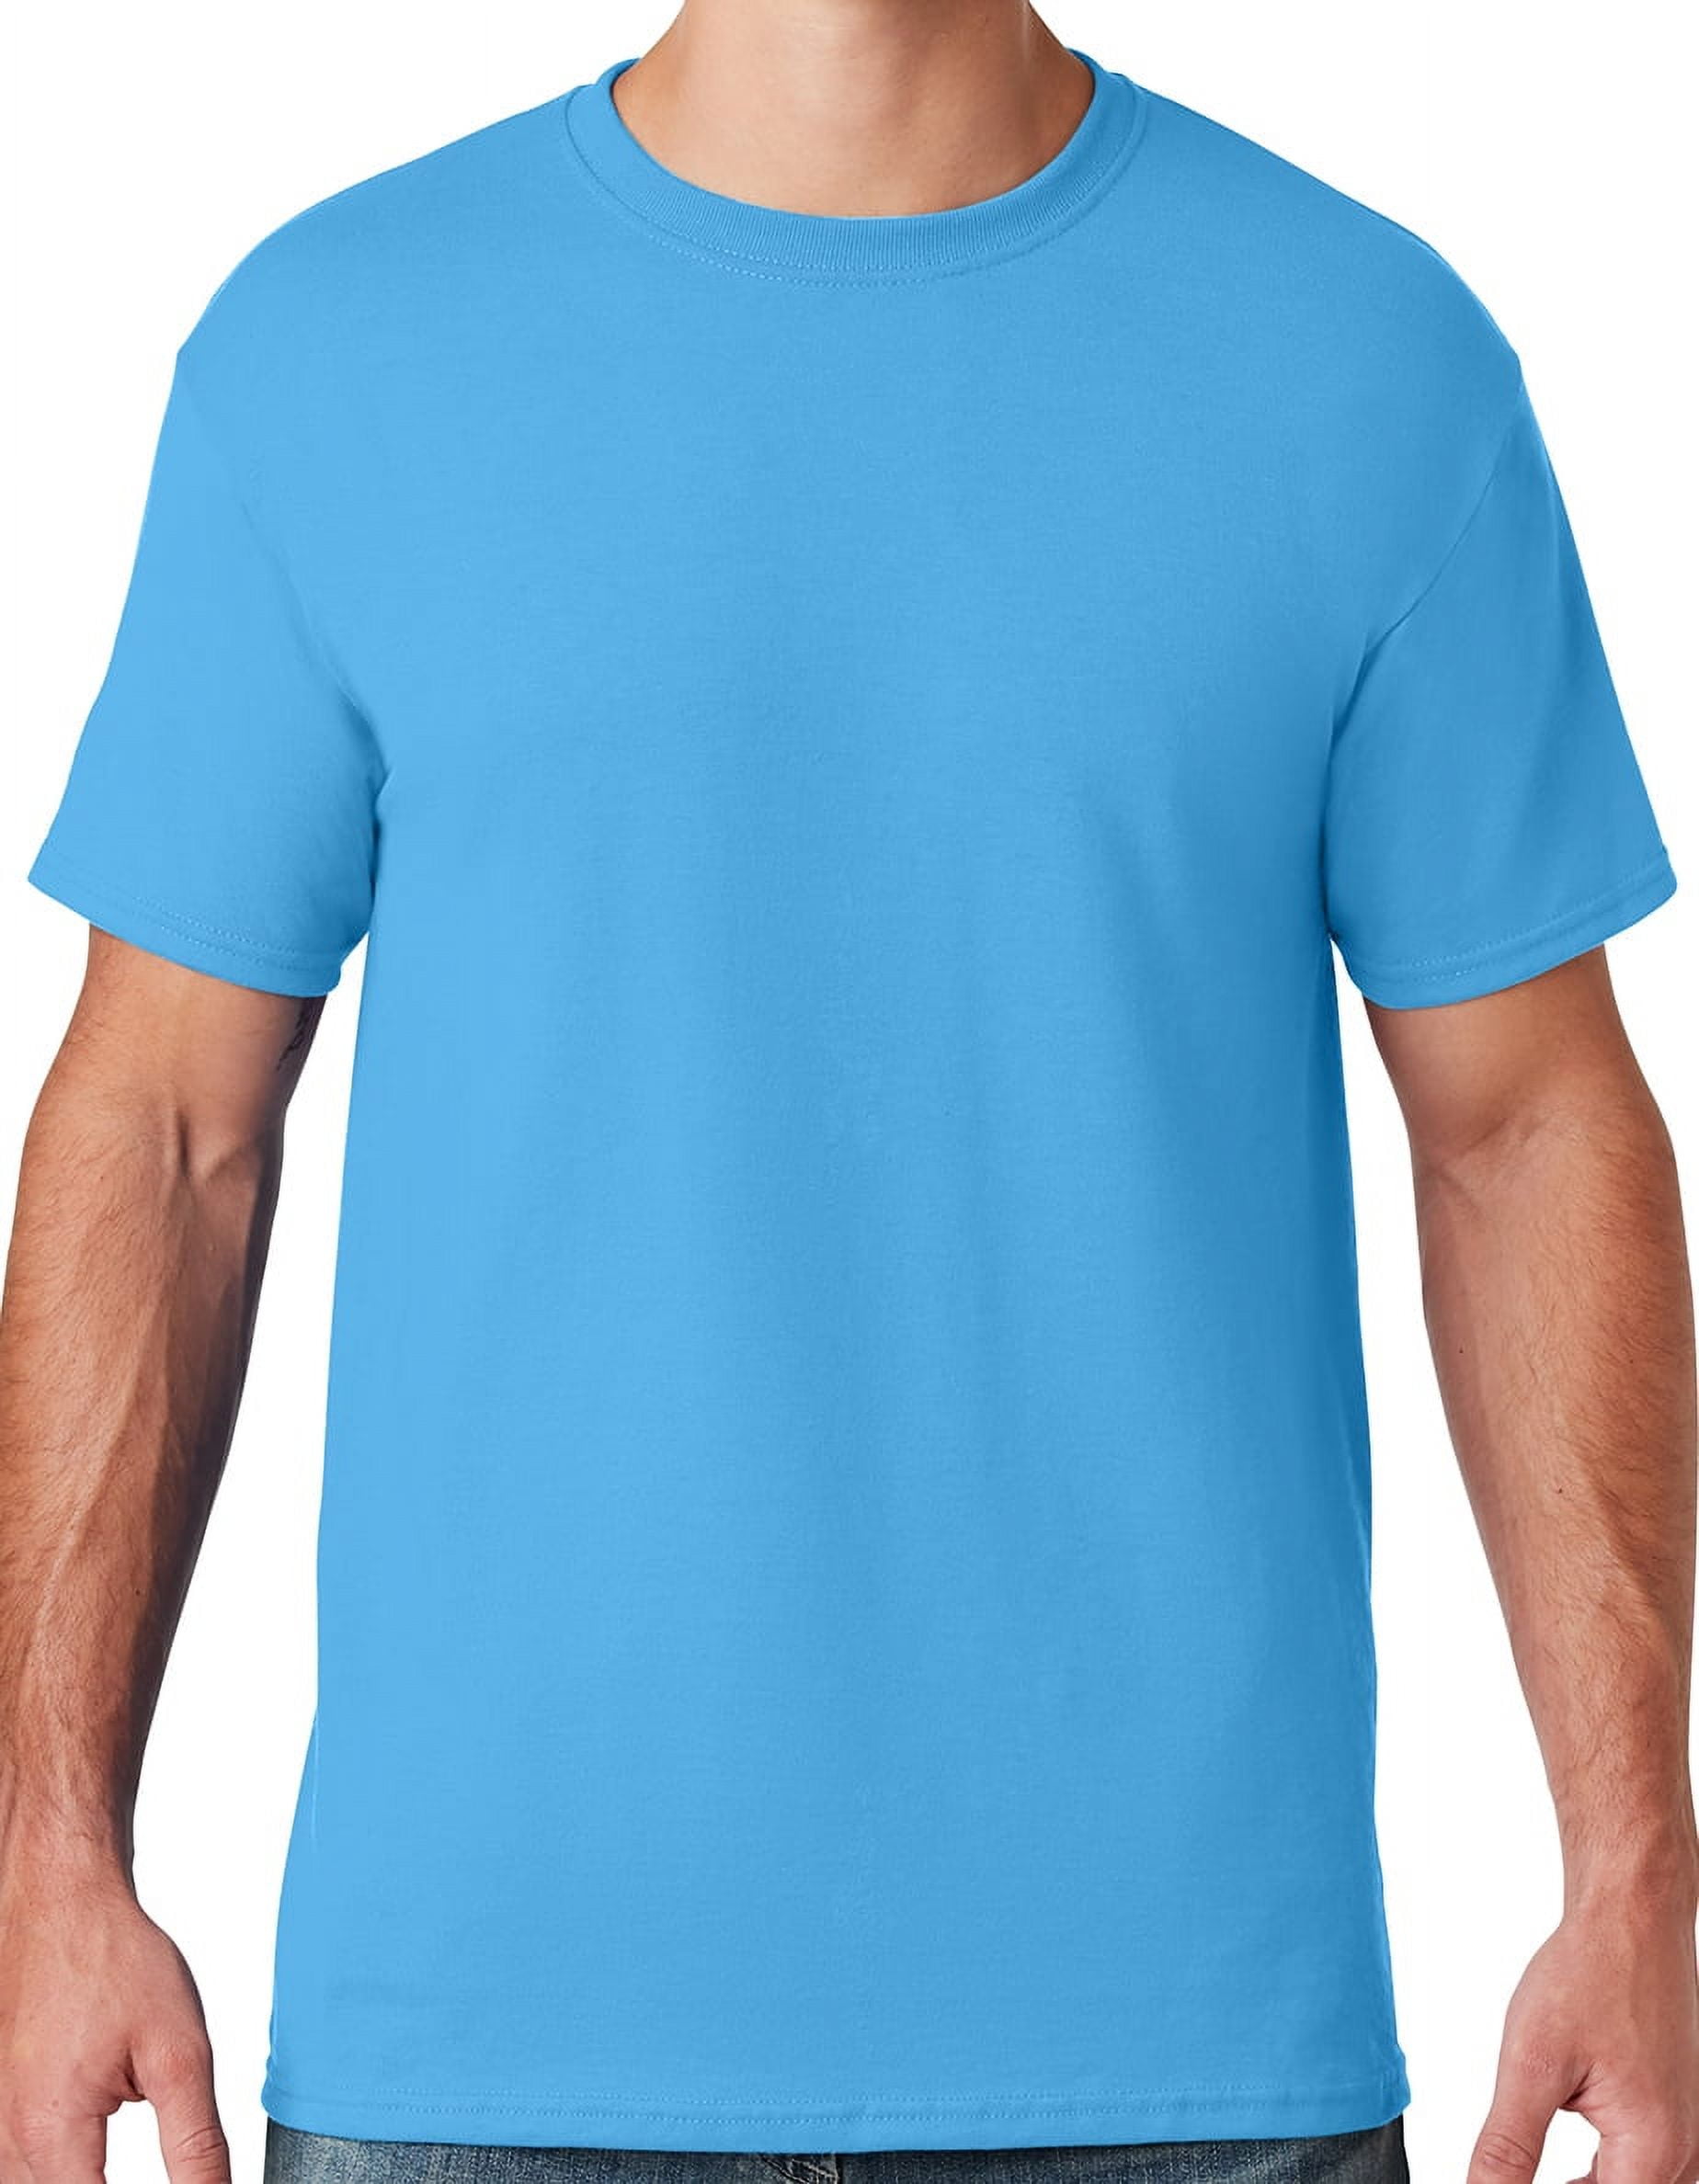 Aqua Blue Sleeveless T Shirt 4739784.htm - Buy Aqua Blue